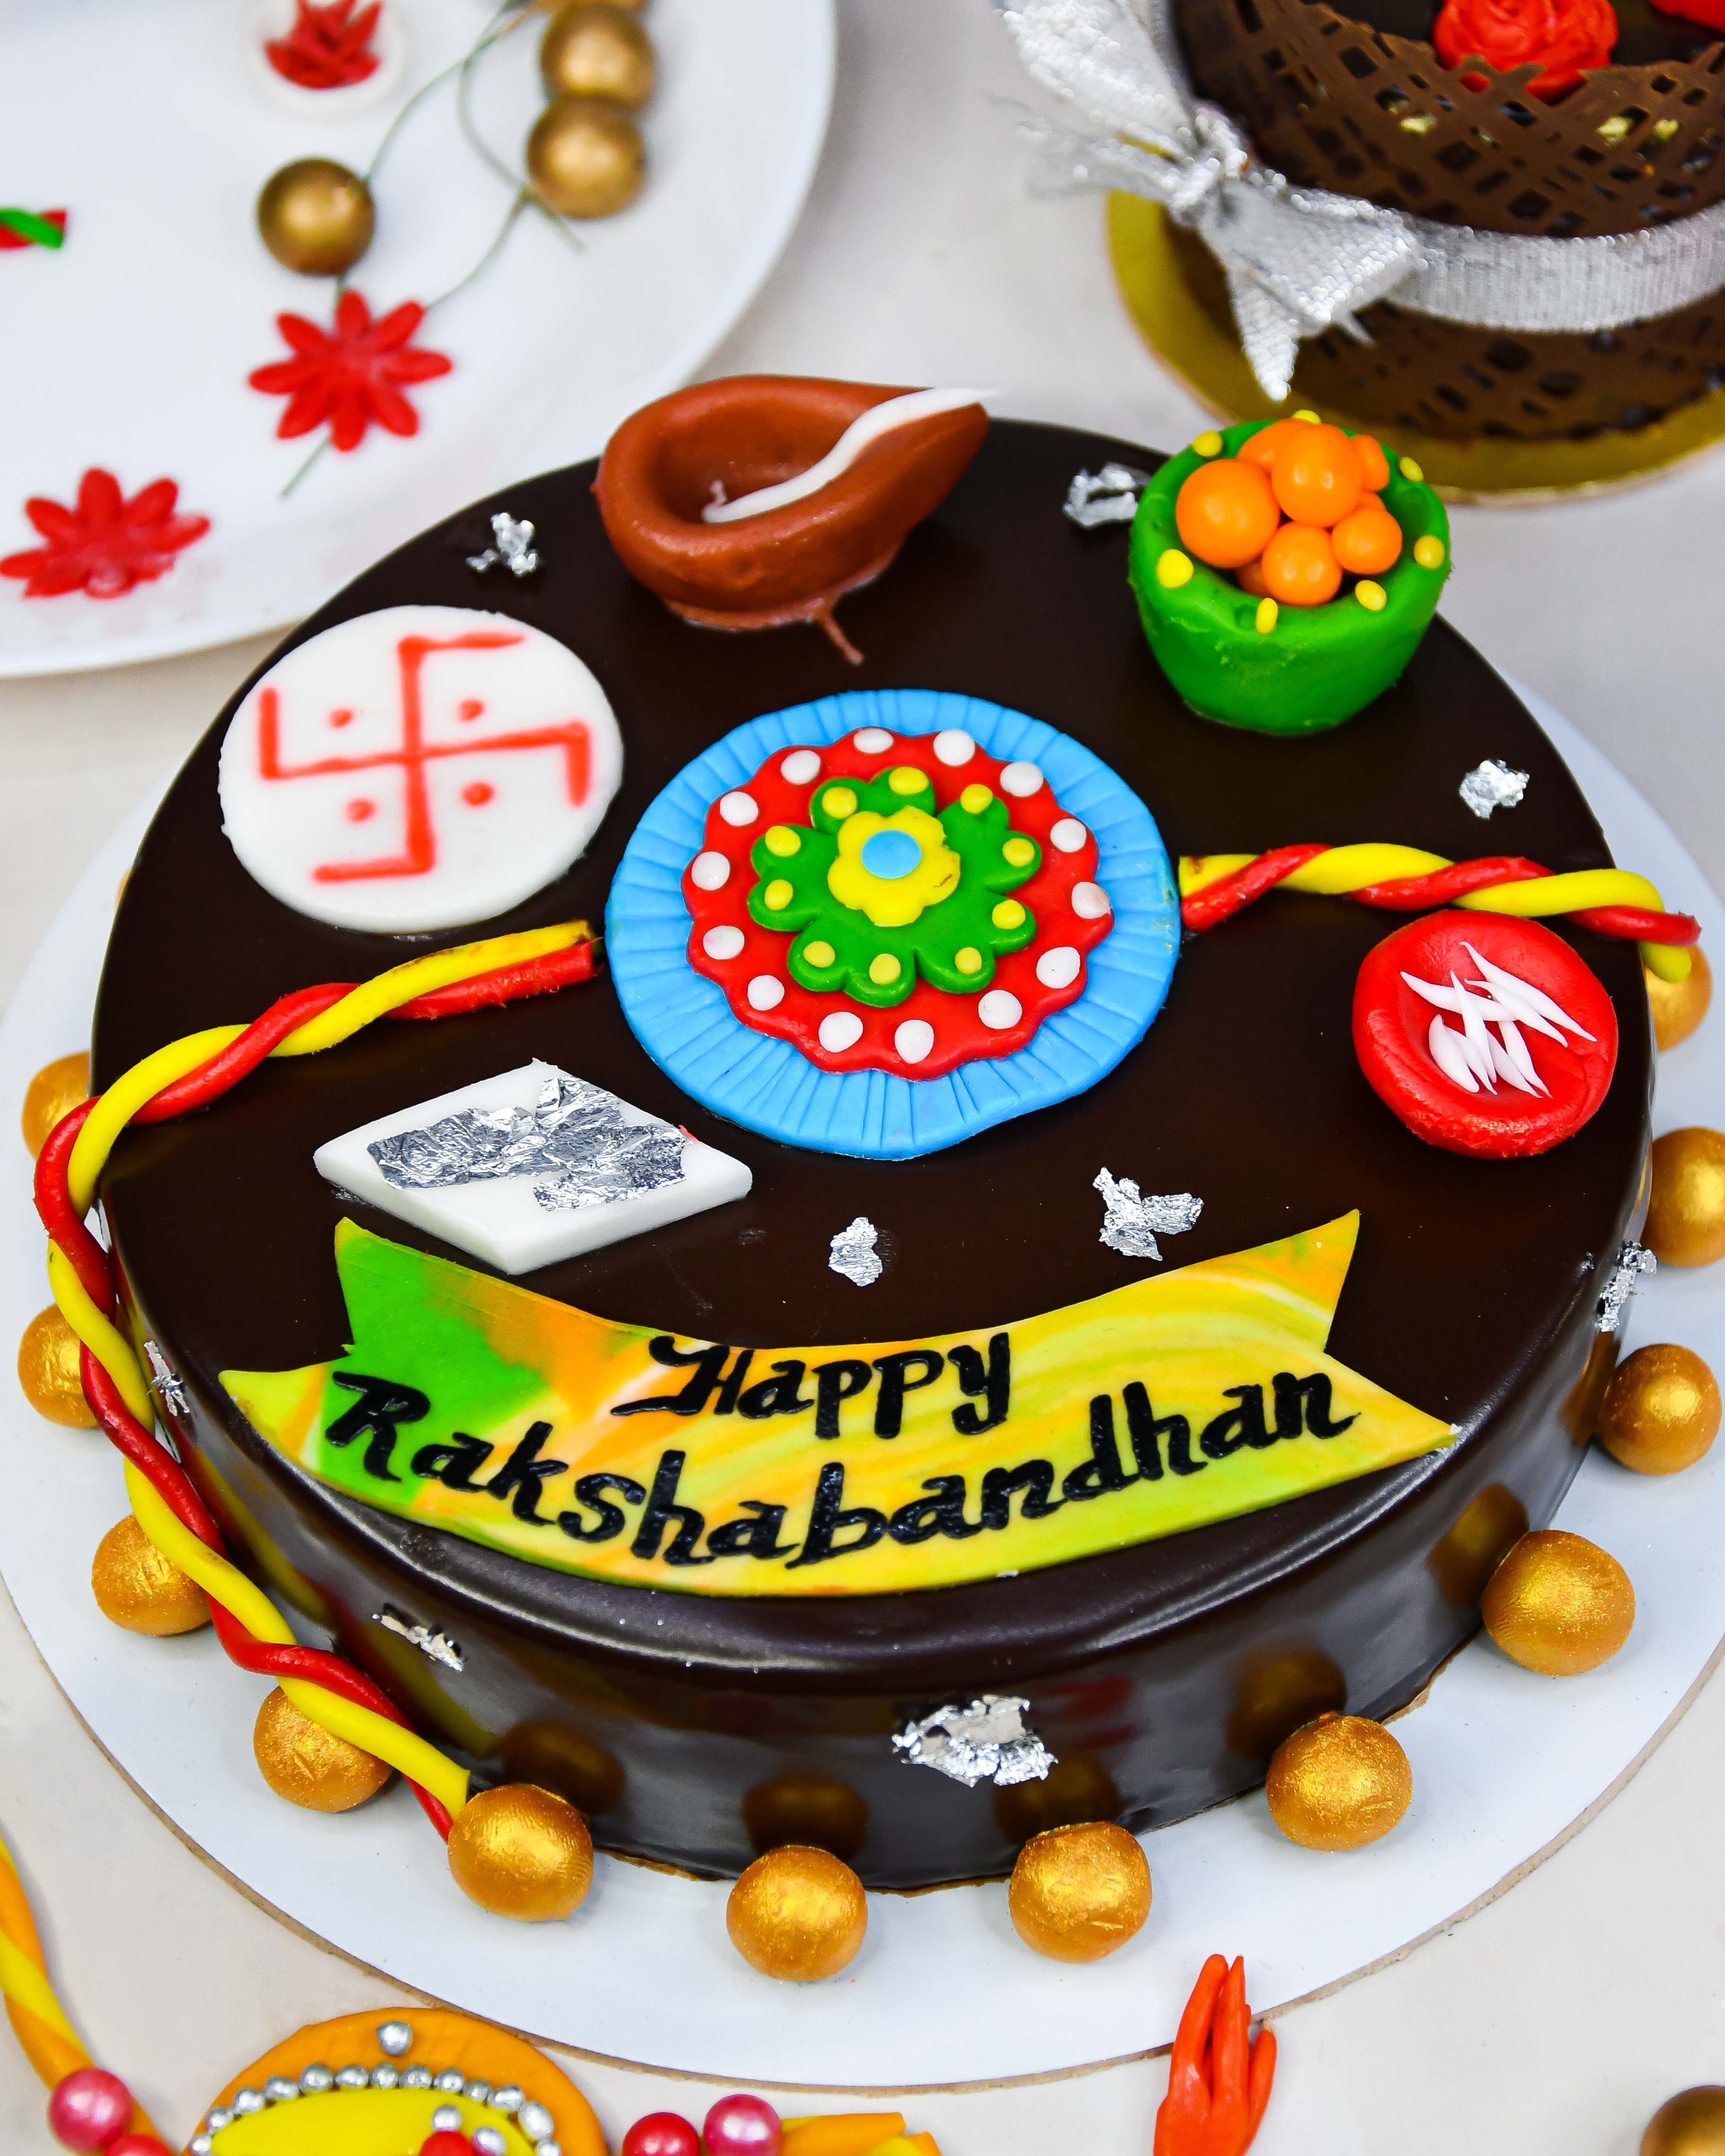 Order Chocolate Rakhi Cakes in 500gm from Cake On Rack